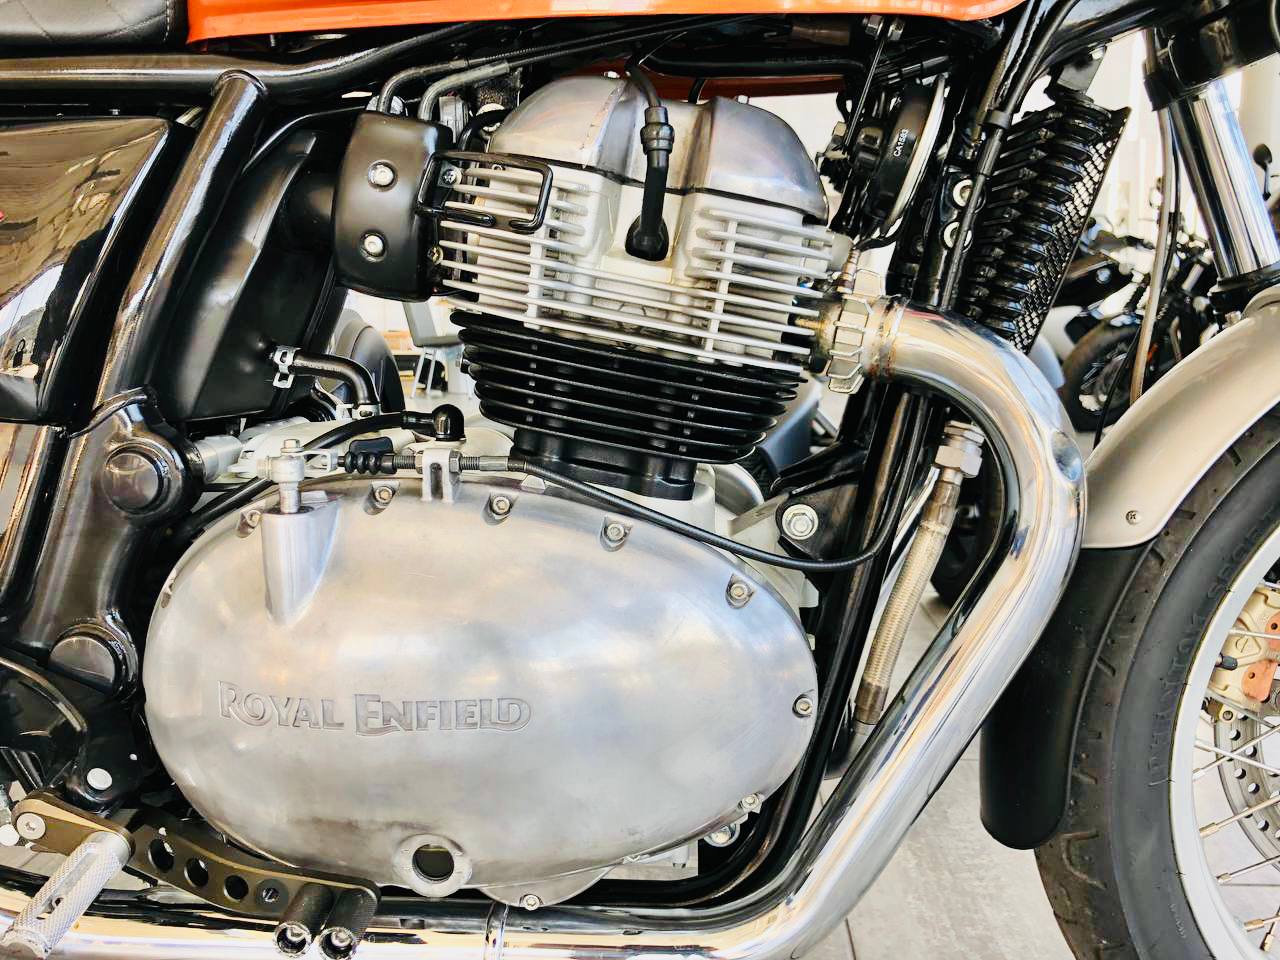 Характеристики Мотоцикл ROYAL ENFIELD INTERCEPTOR 650 2019 рік, б/у (5 000 км)